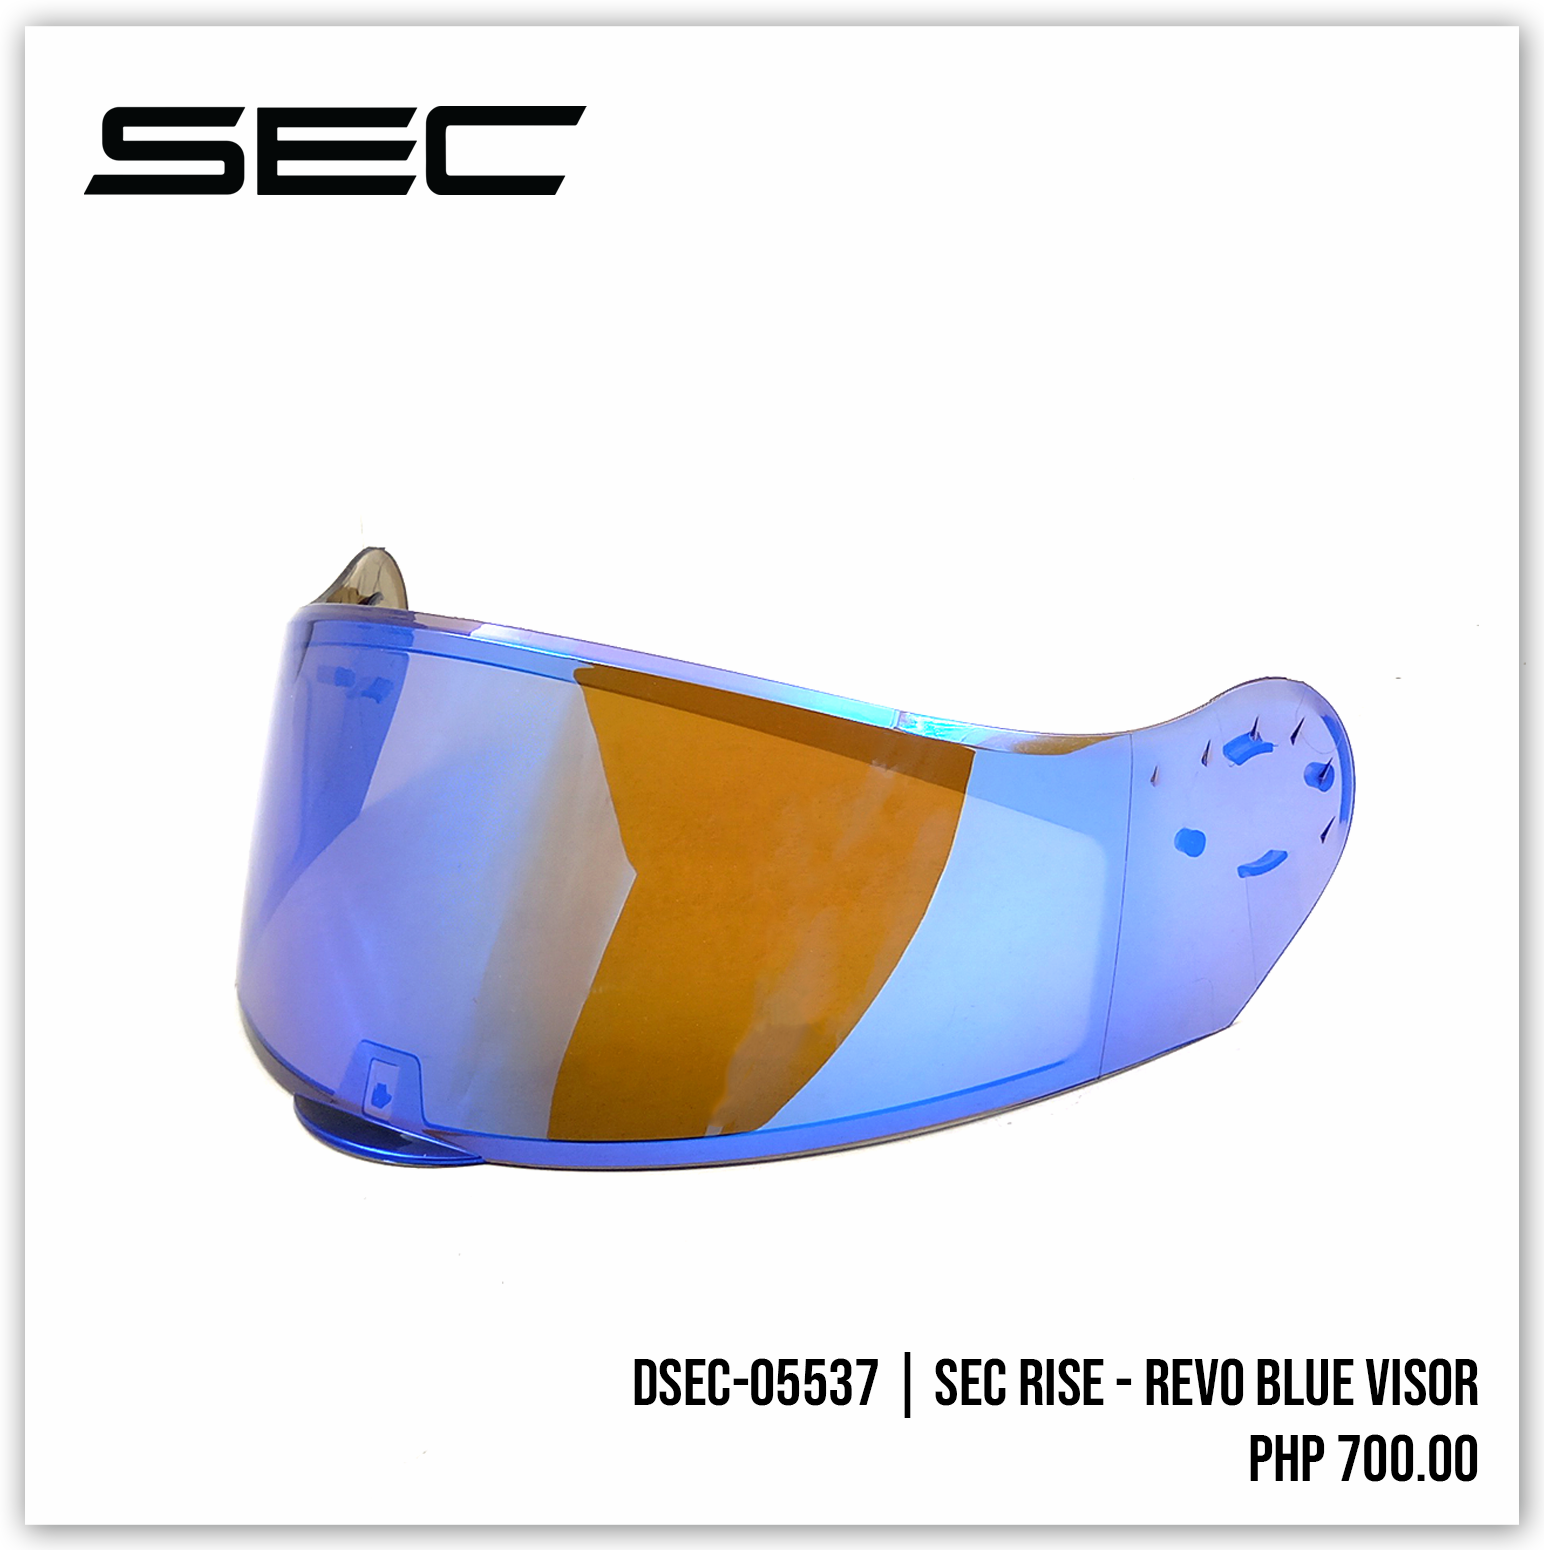 SEC RISE - REVO BLUE VISOR